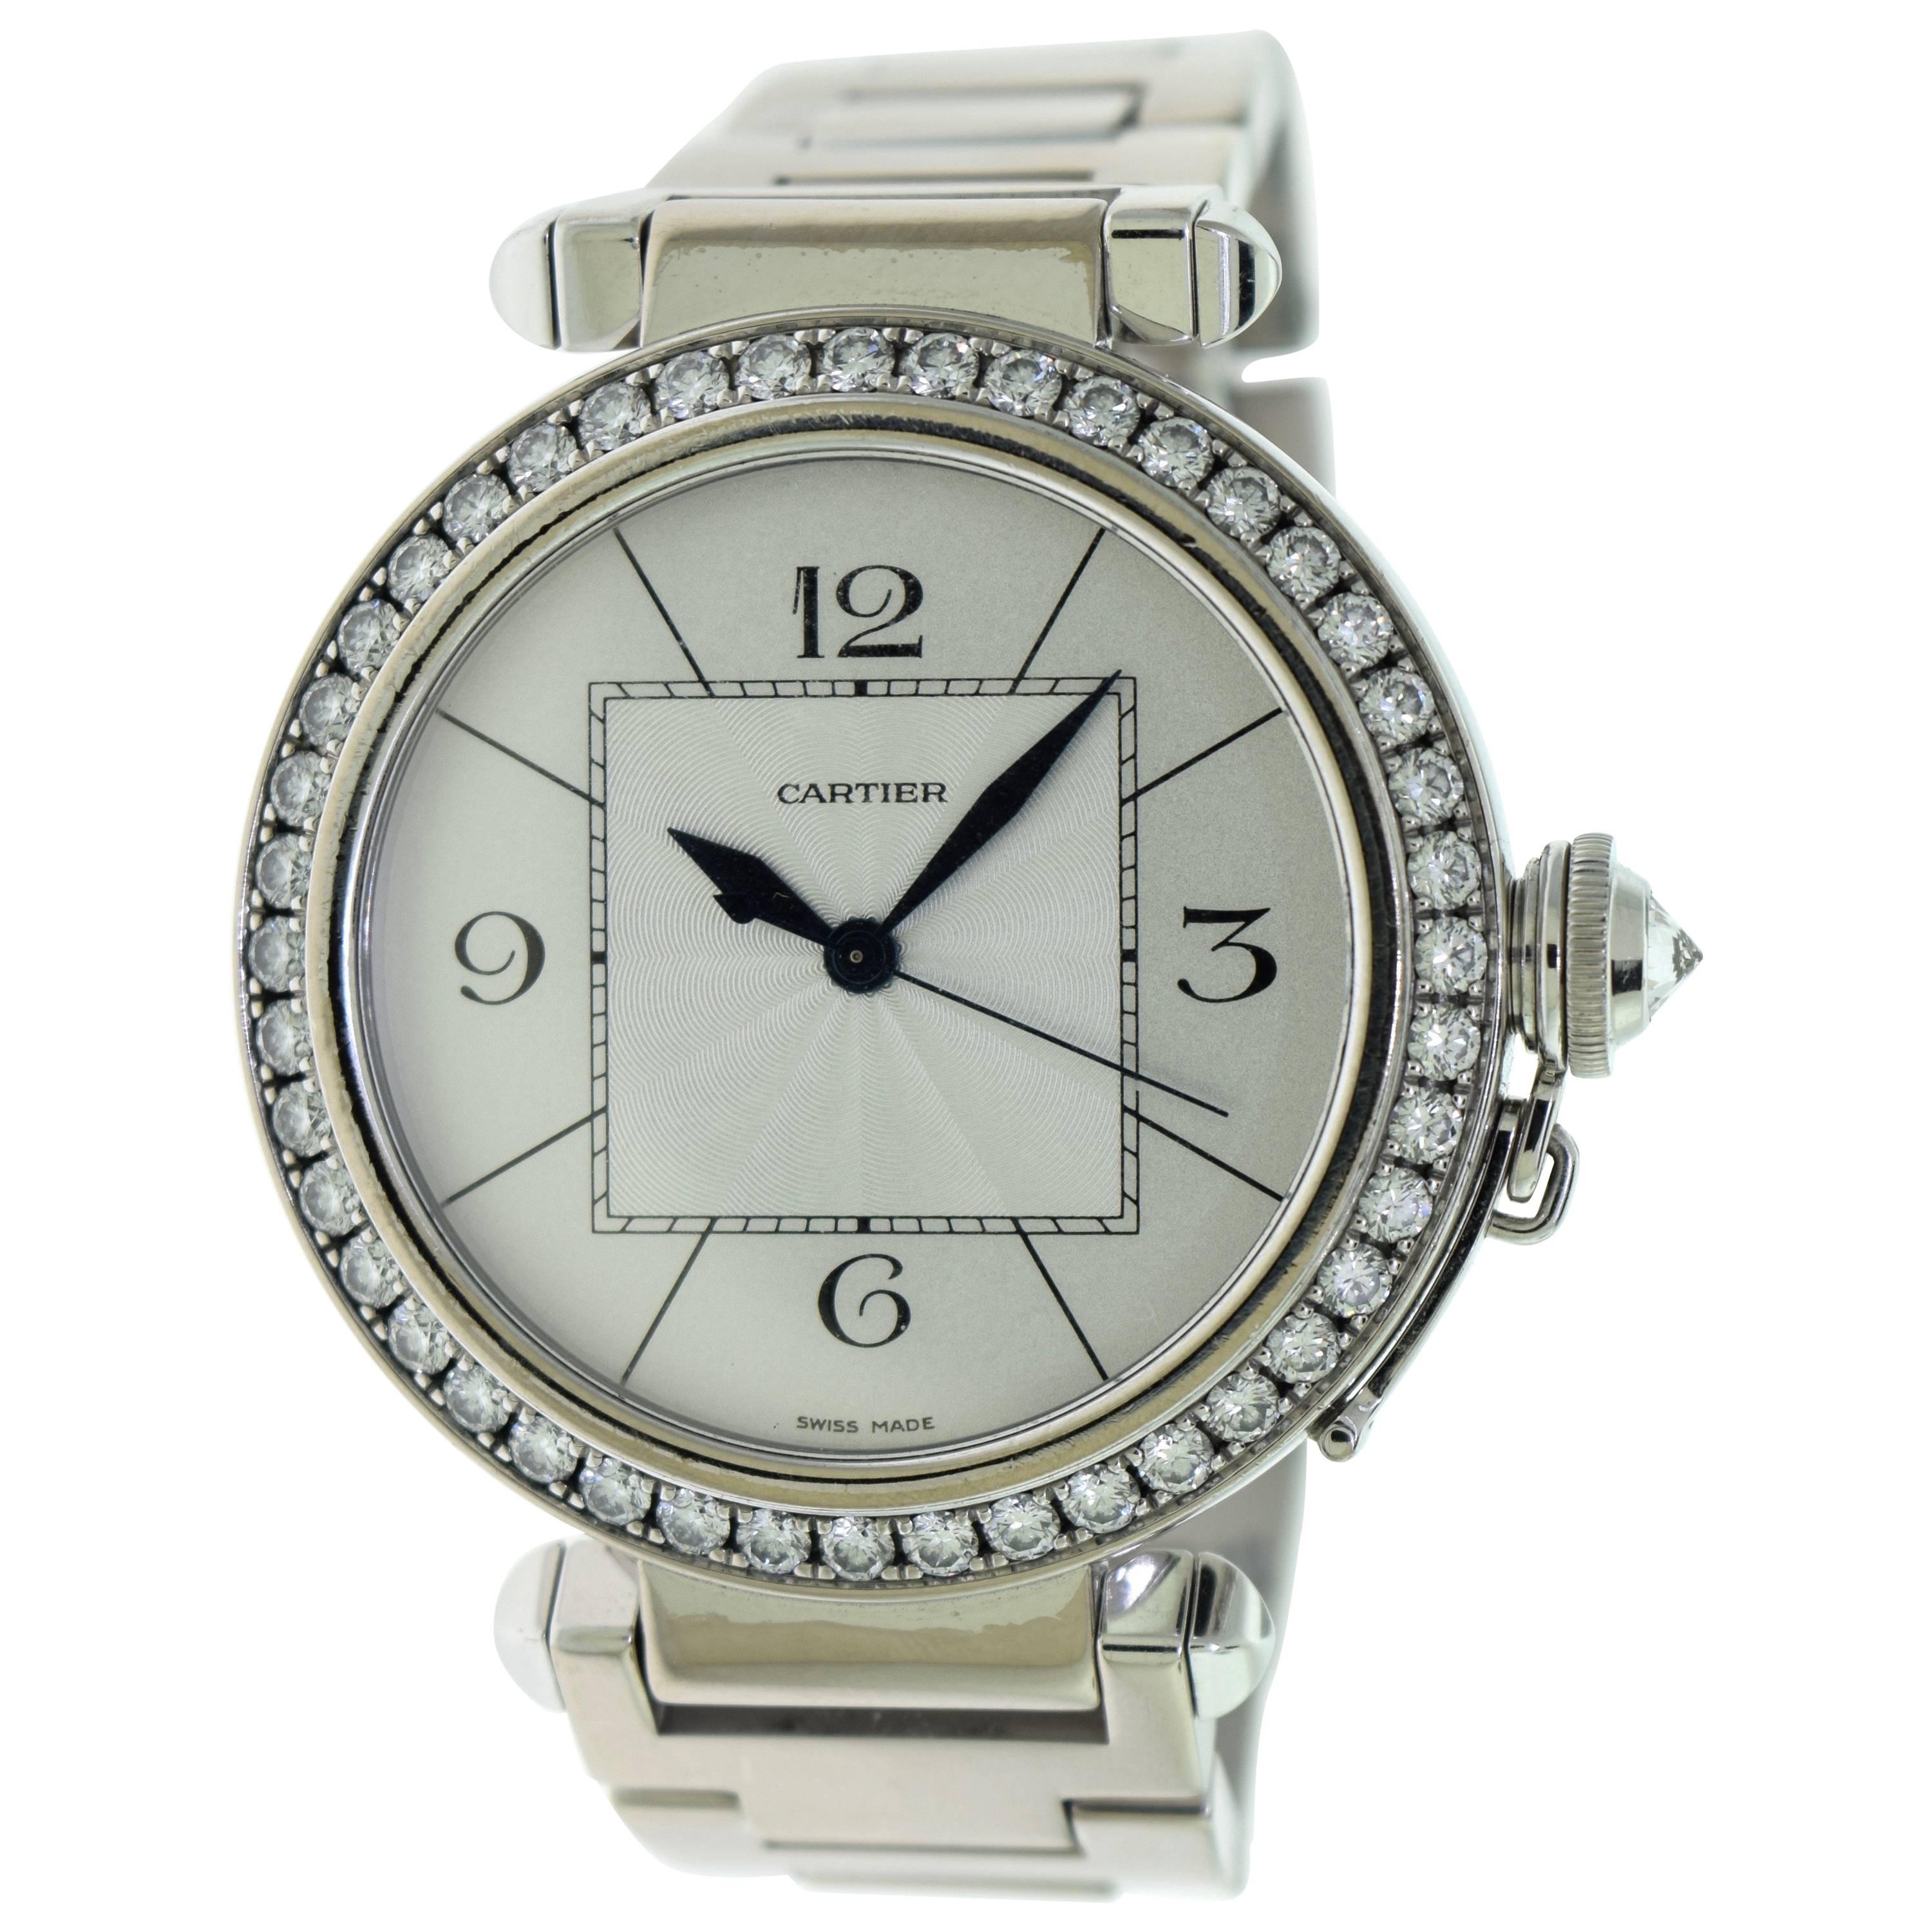 Cartier Pasha de Cartier White Gold Watch with Diamonds, Ref. #2765 For Sale